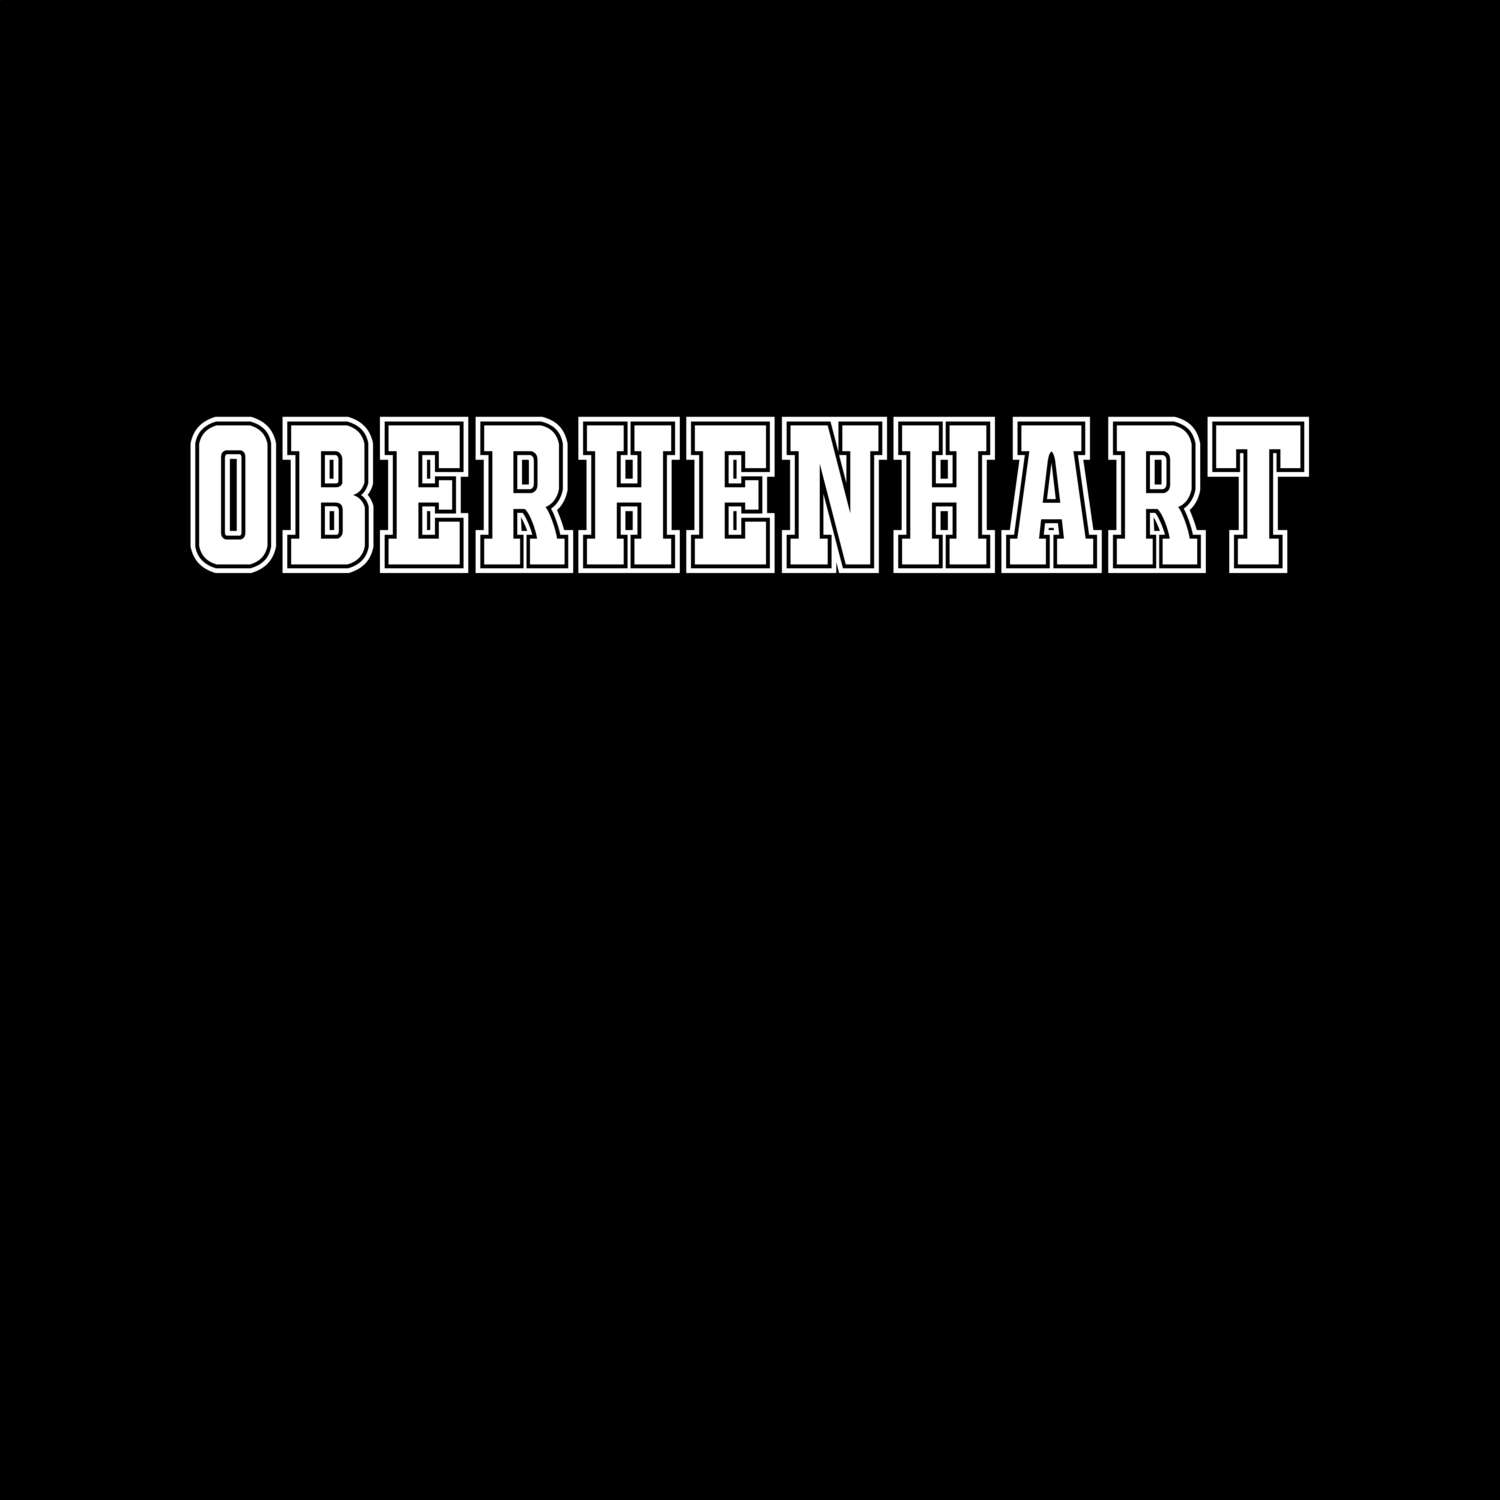 Oberhenhart T-Shirt »Classic«